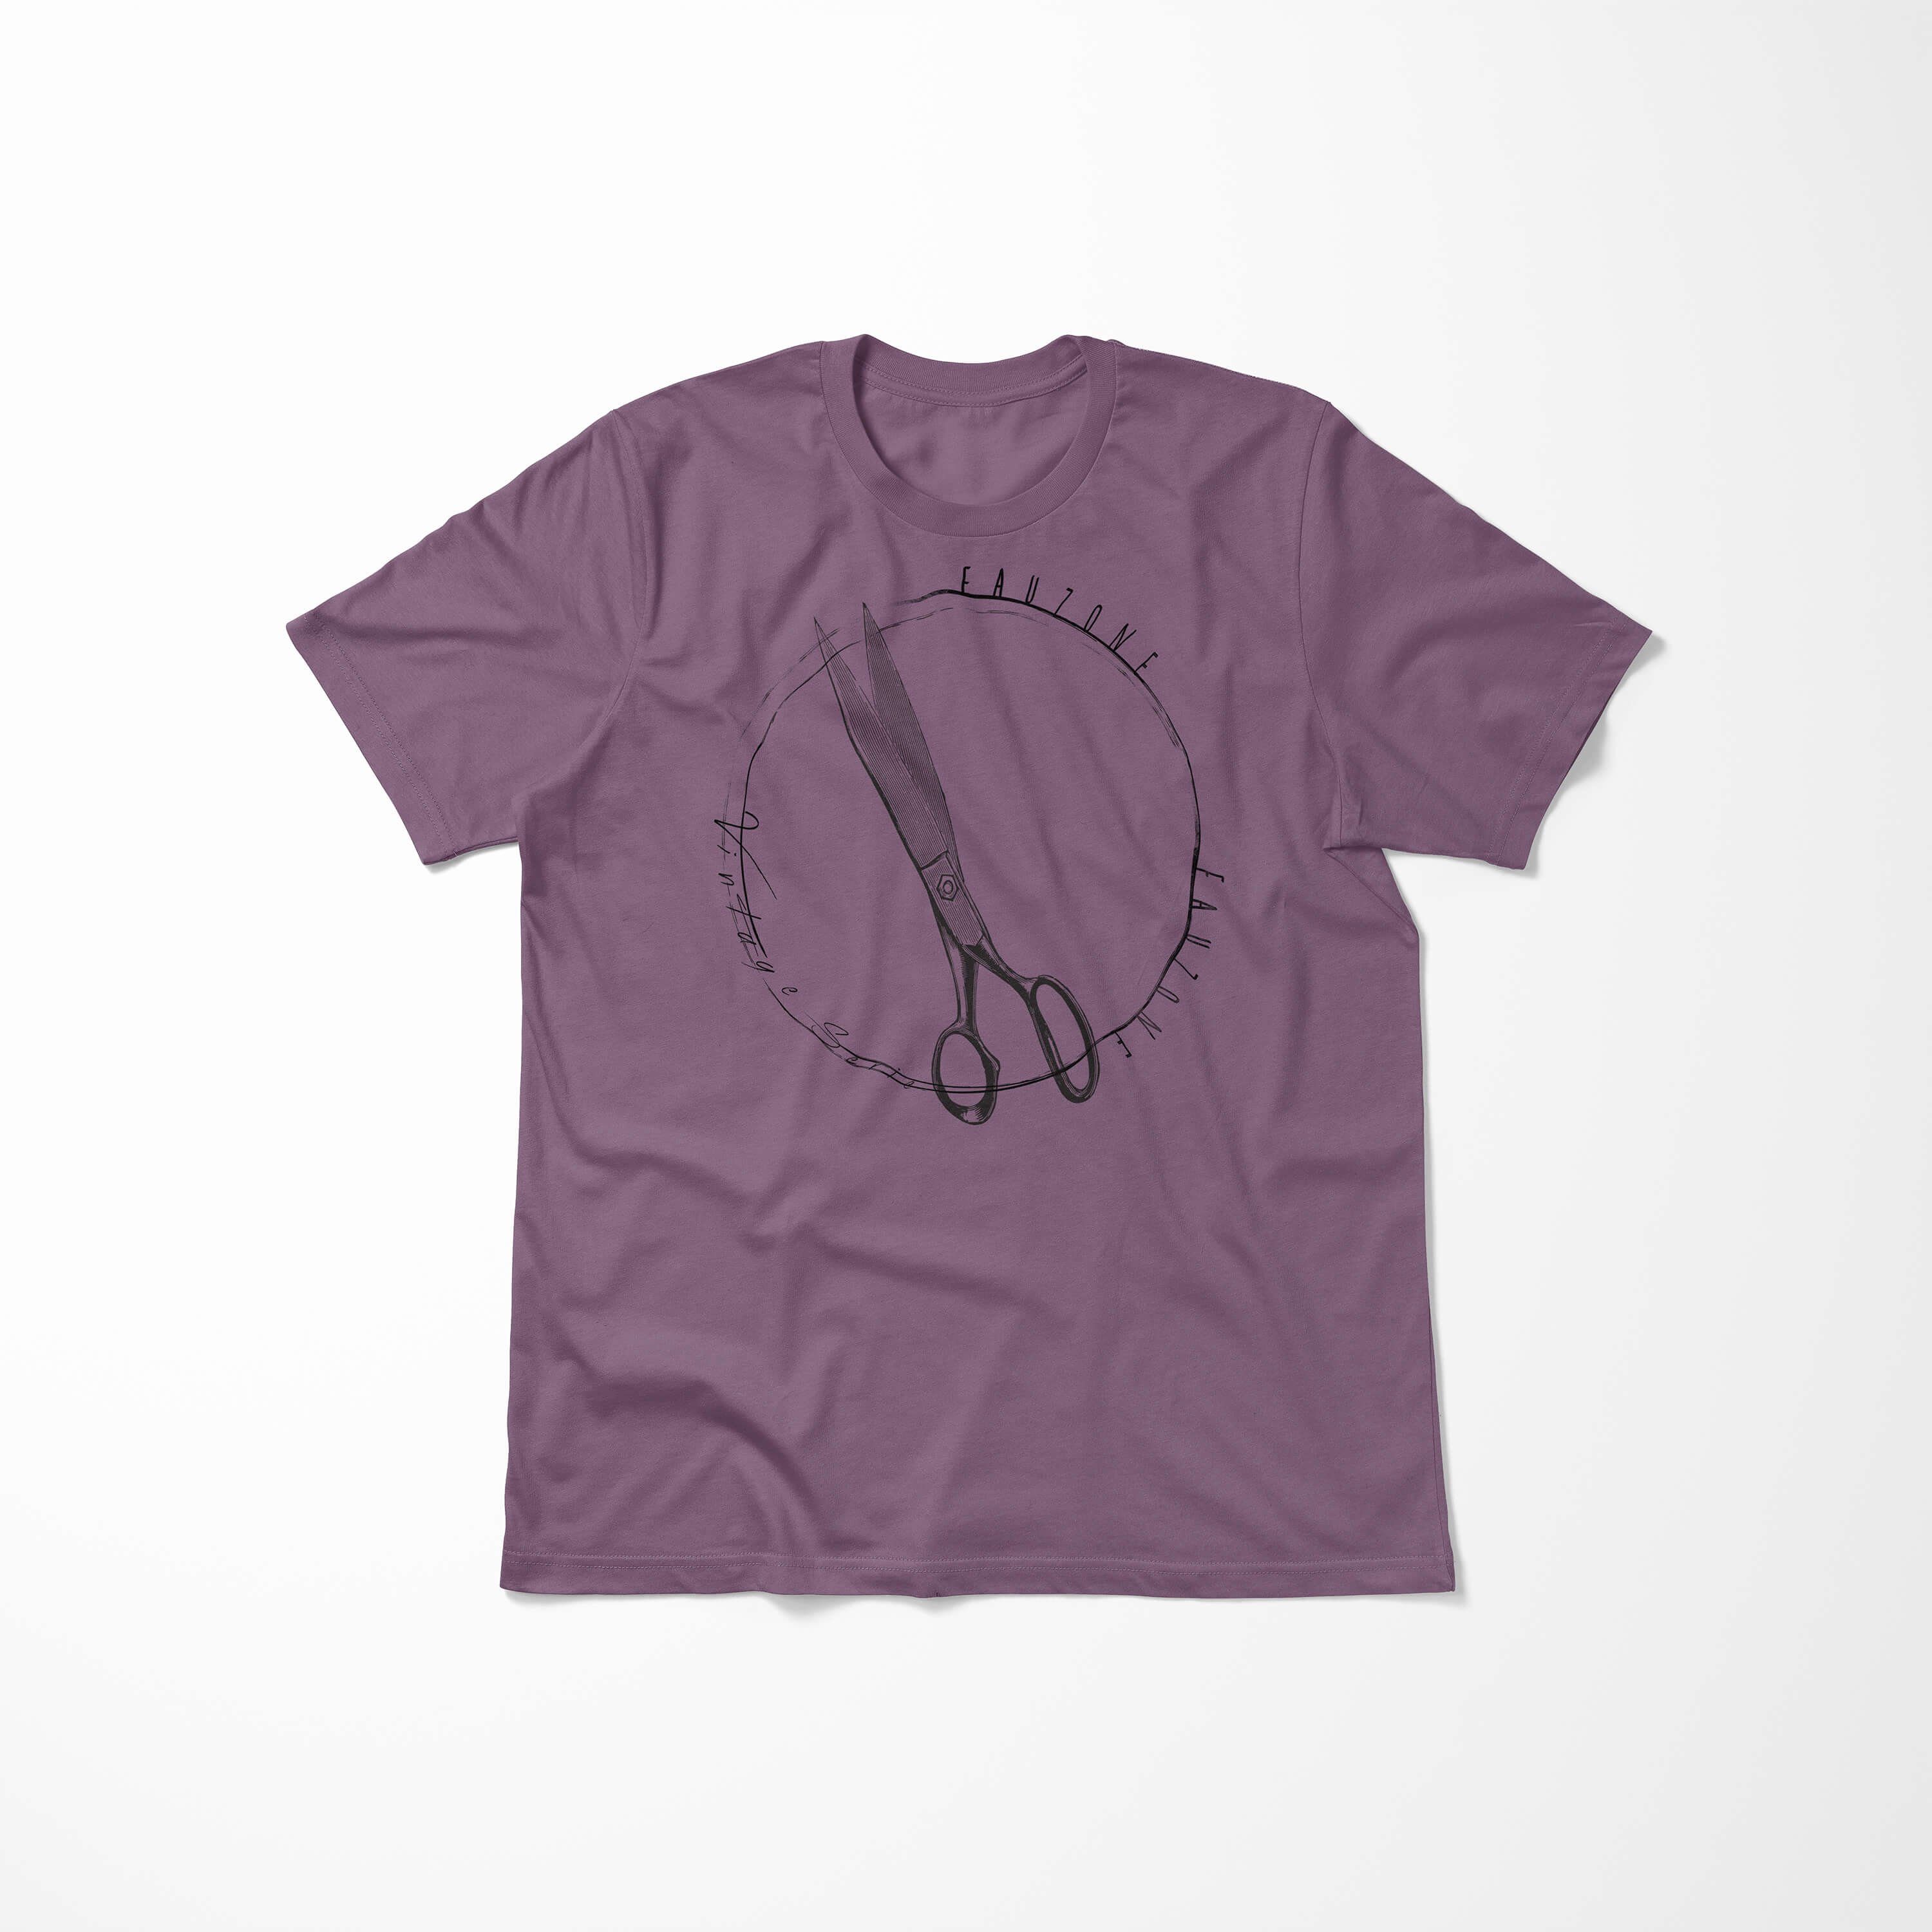 Sinus Shiraz Schere Art T-Shirt T-Shirt Vintage Herren